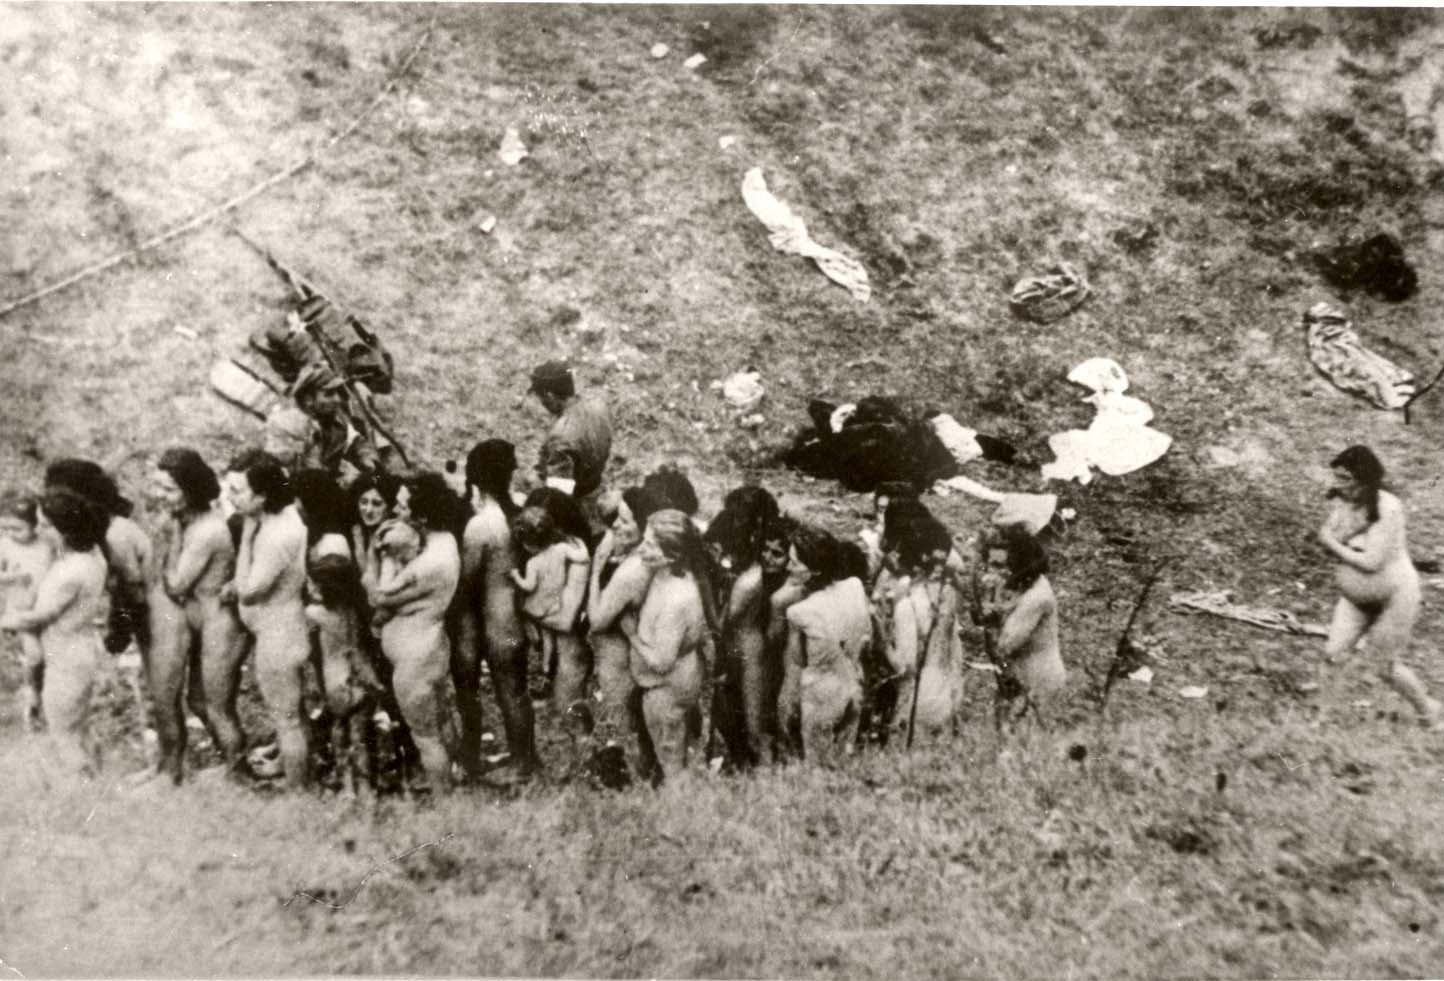 Women and children before being murdered. Photo taken by Gustav Hille, a German policeman